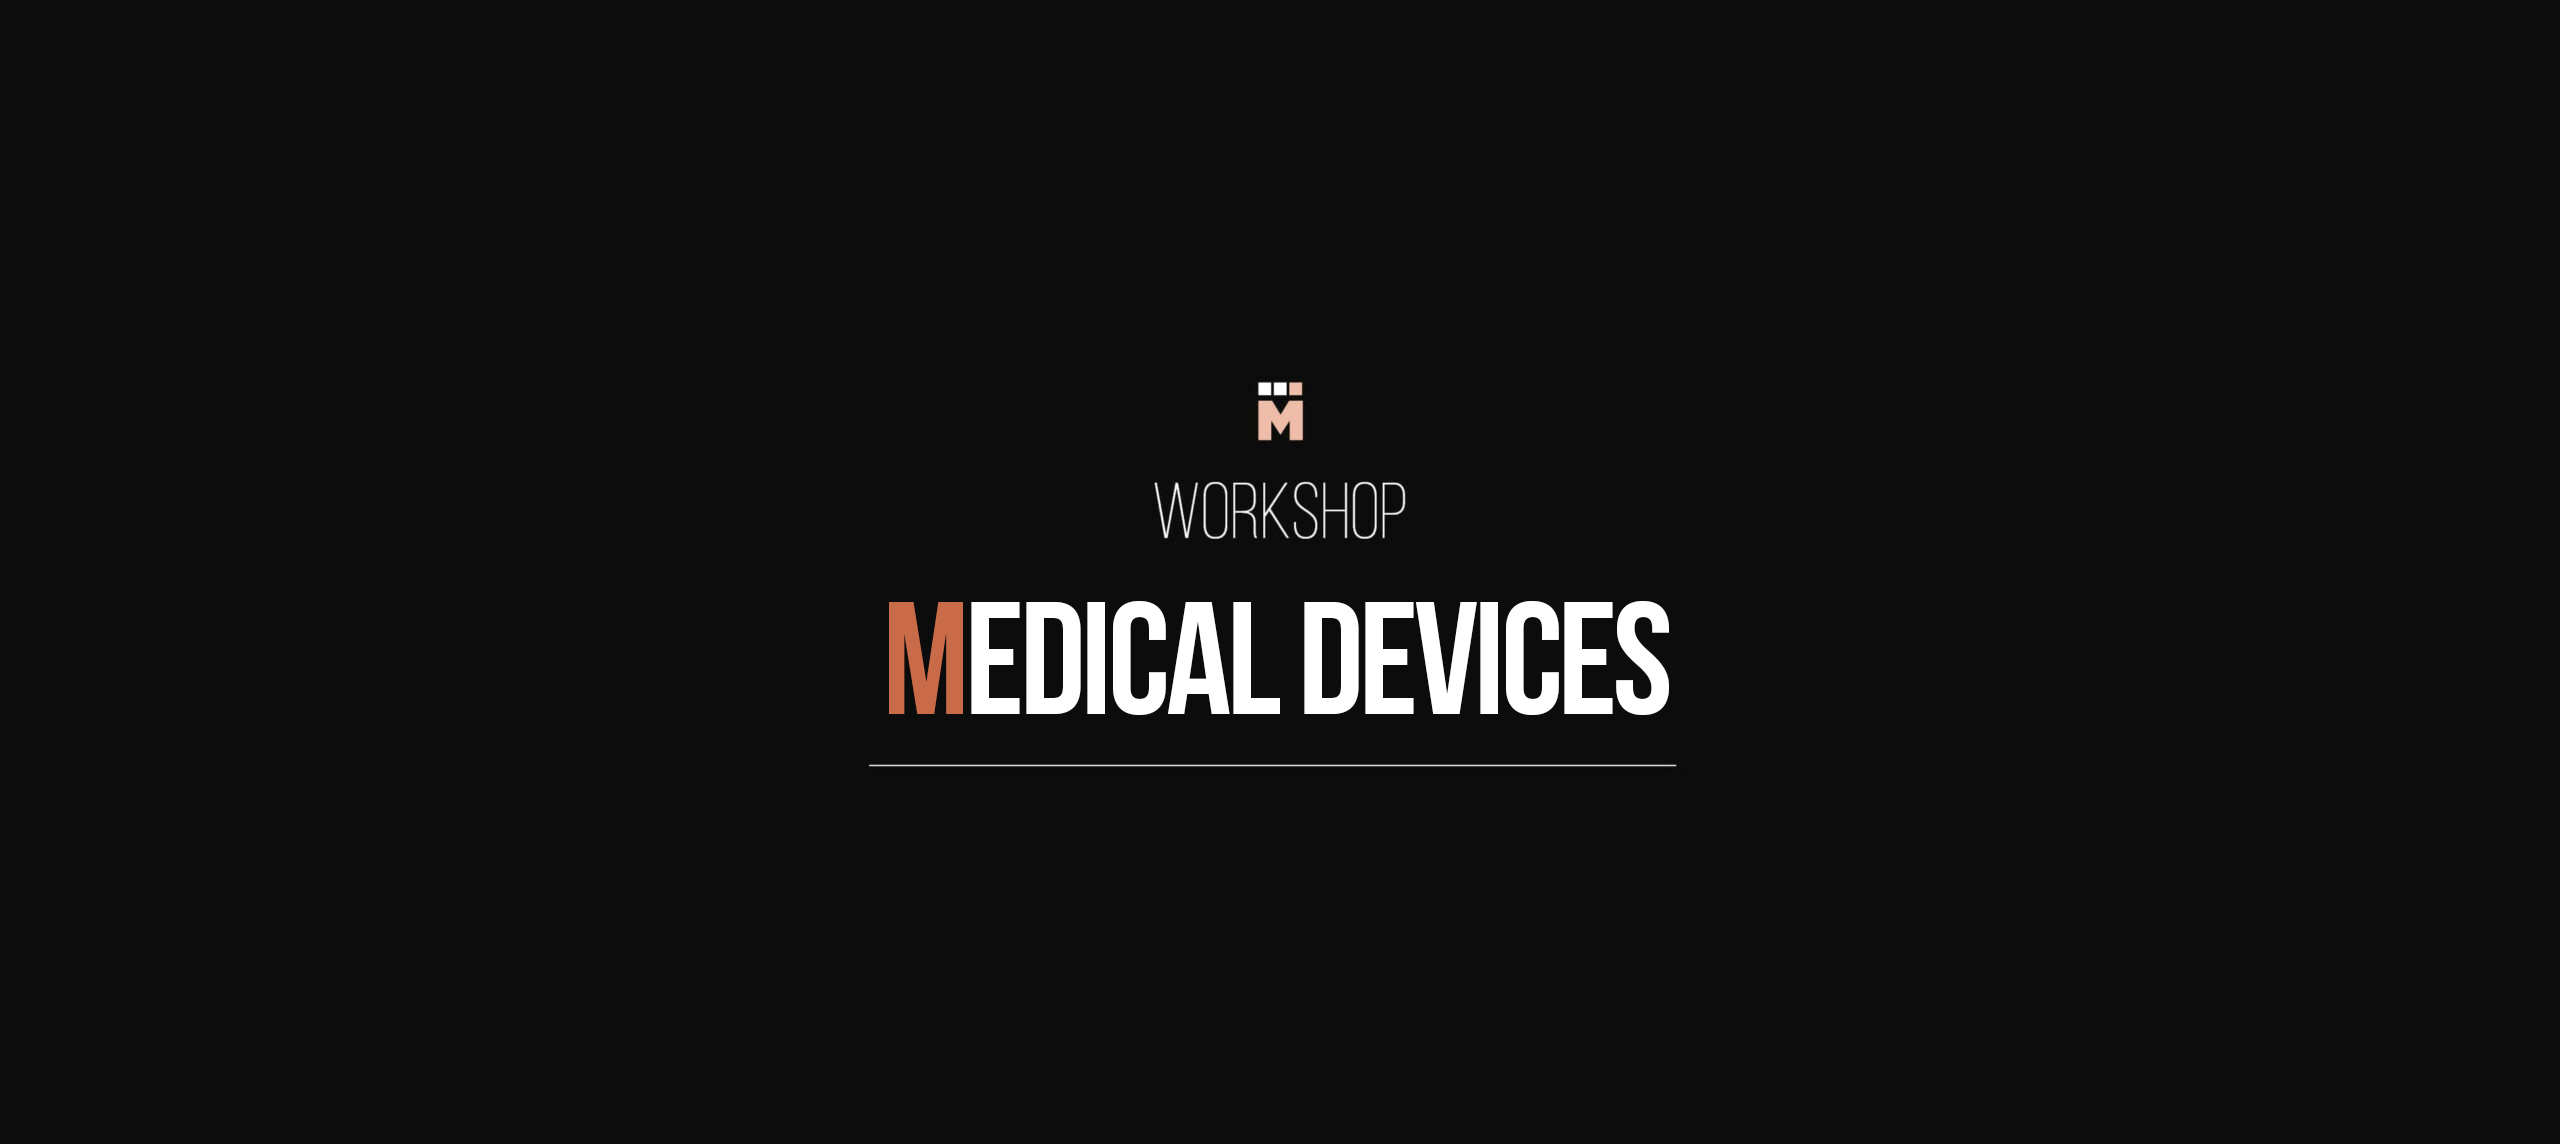 Medical-casting-agency-model-recruiting-workshop-medical-devices